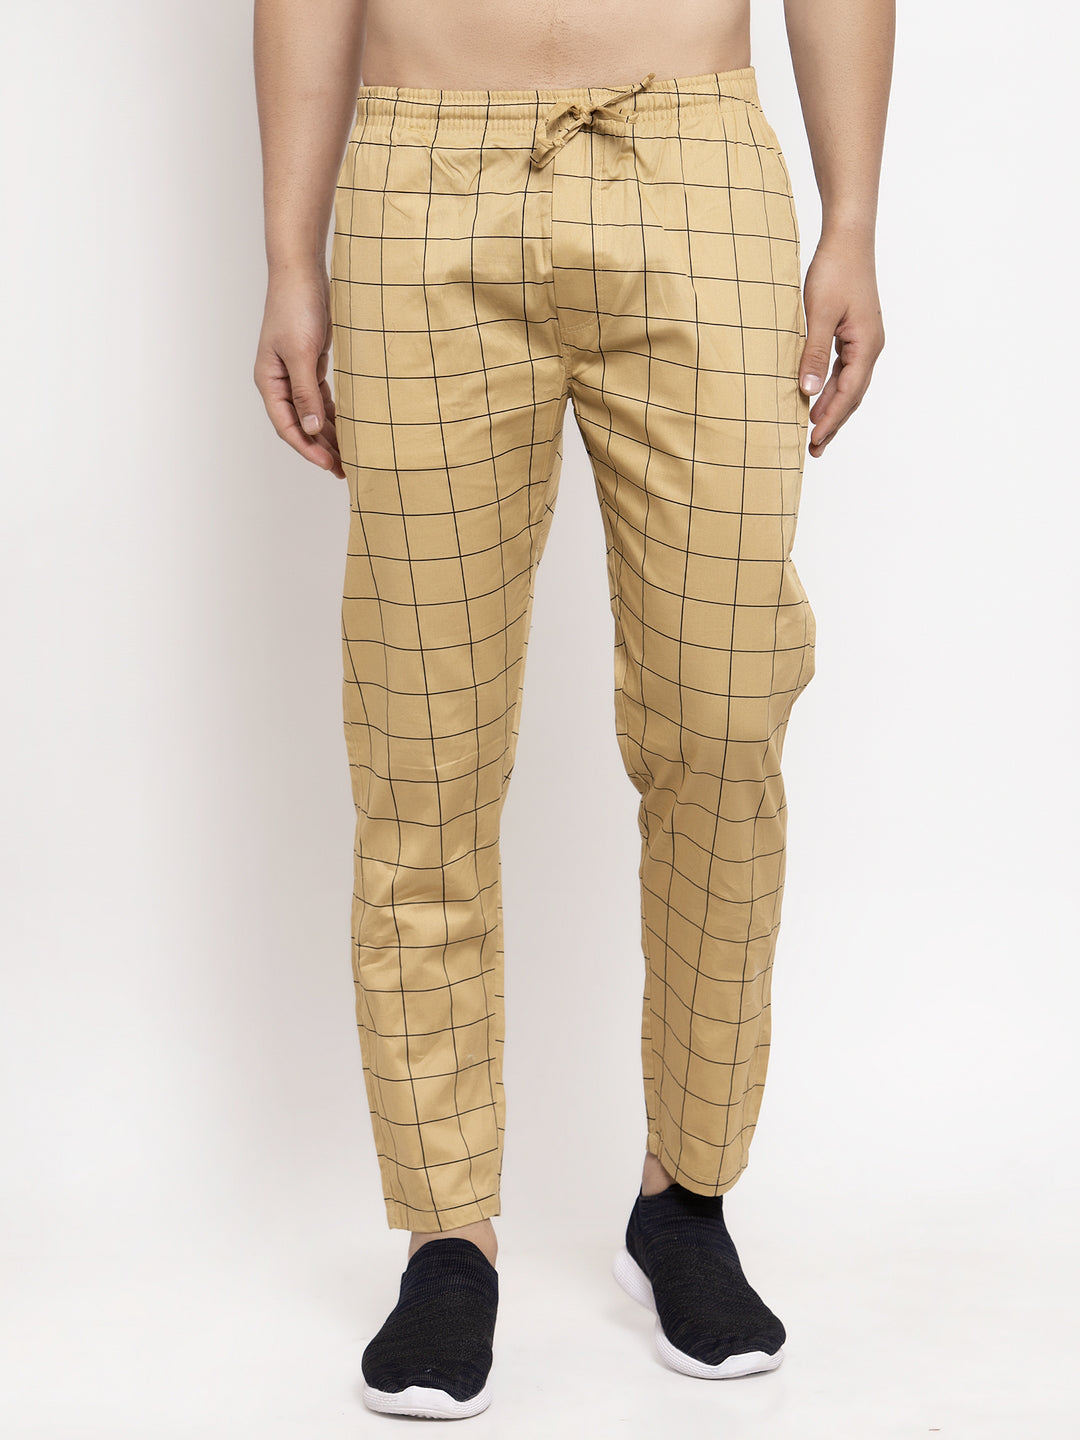 Men's Rust Checked Cotton Track Pants ( JOG 012Rust ) - Jainish